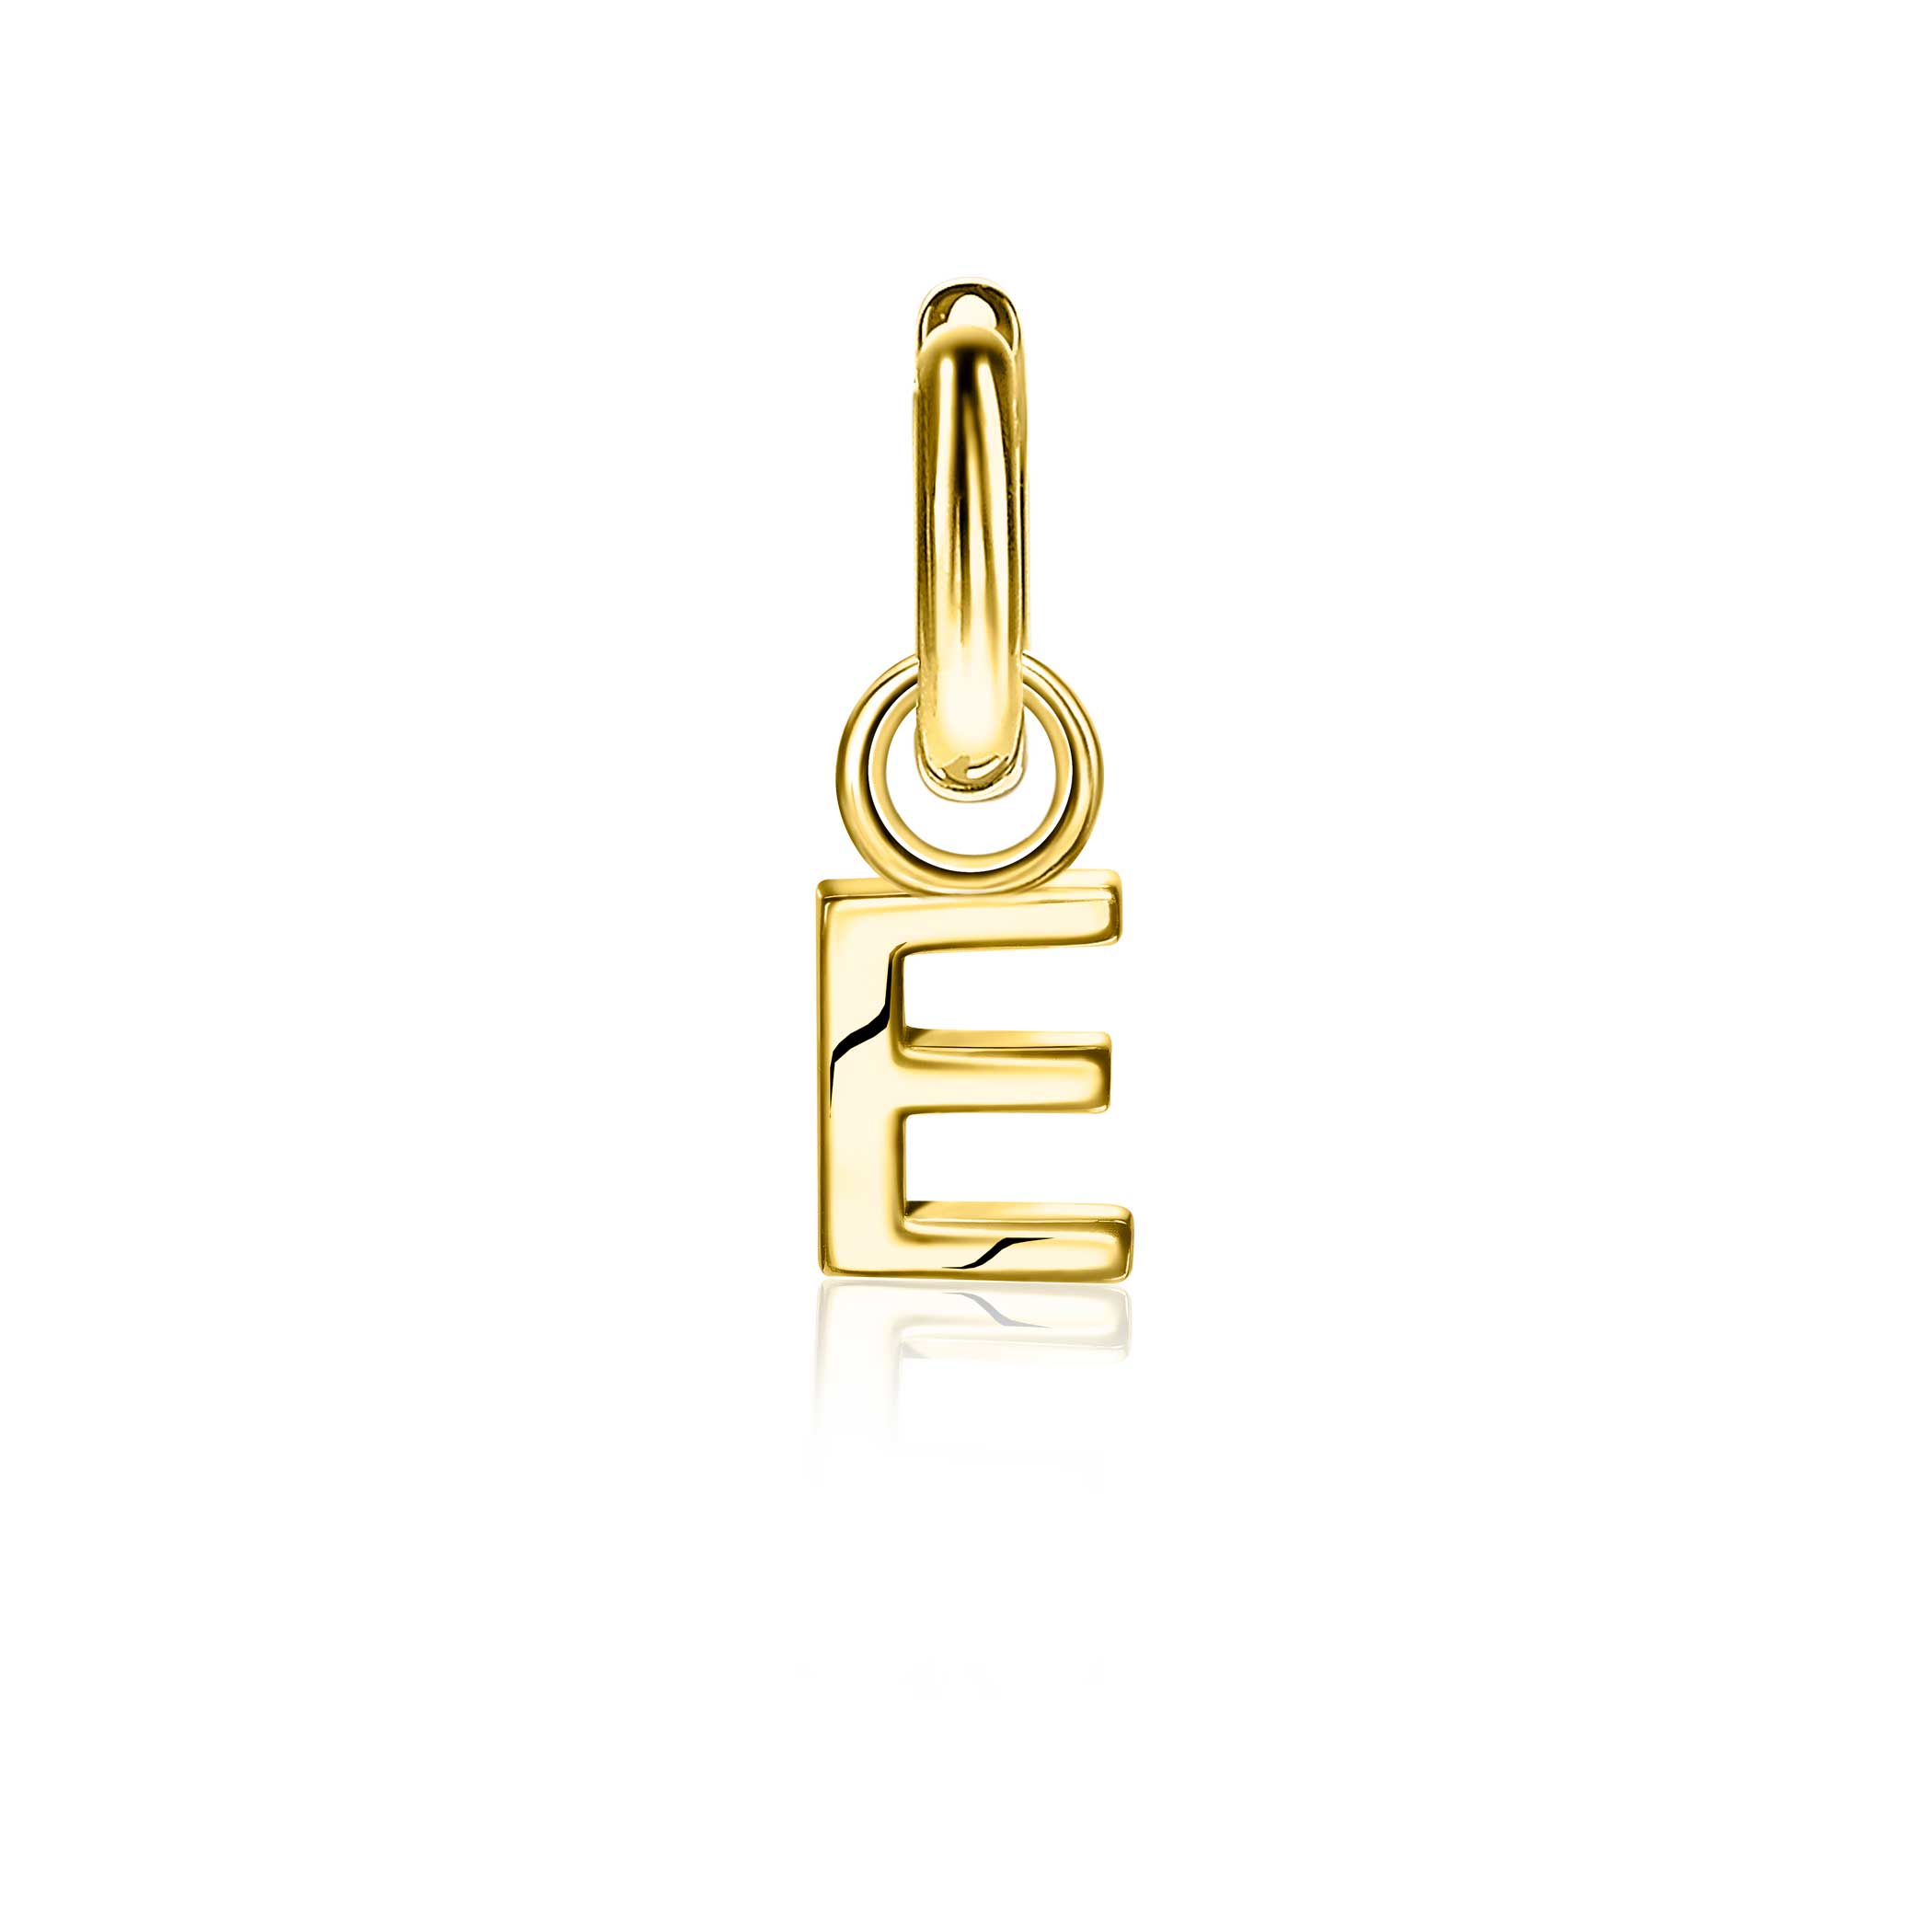 ZINZI Gold Plated Letter Earrings Pendant E price per piece ZICH2145E (excl. hoop earrings)